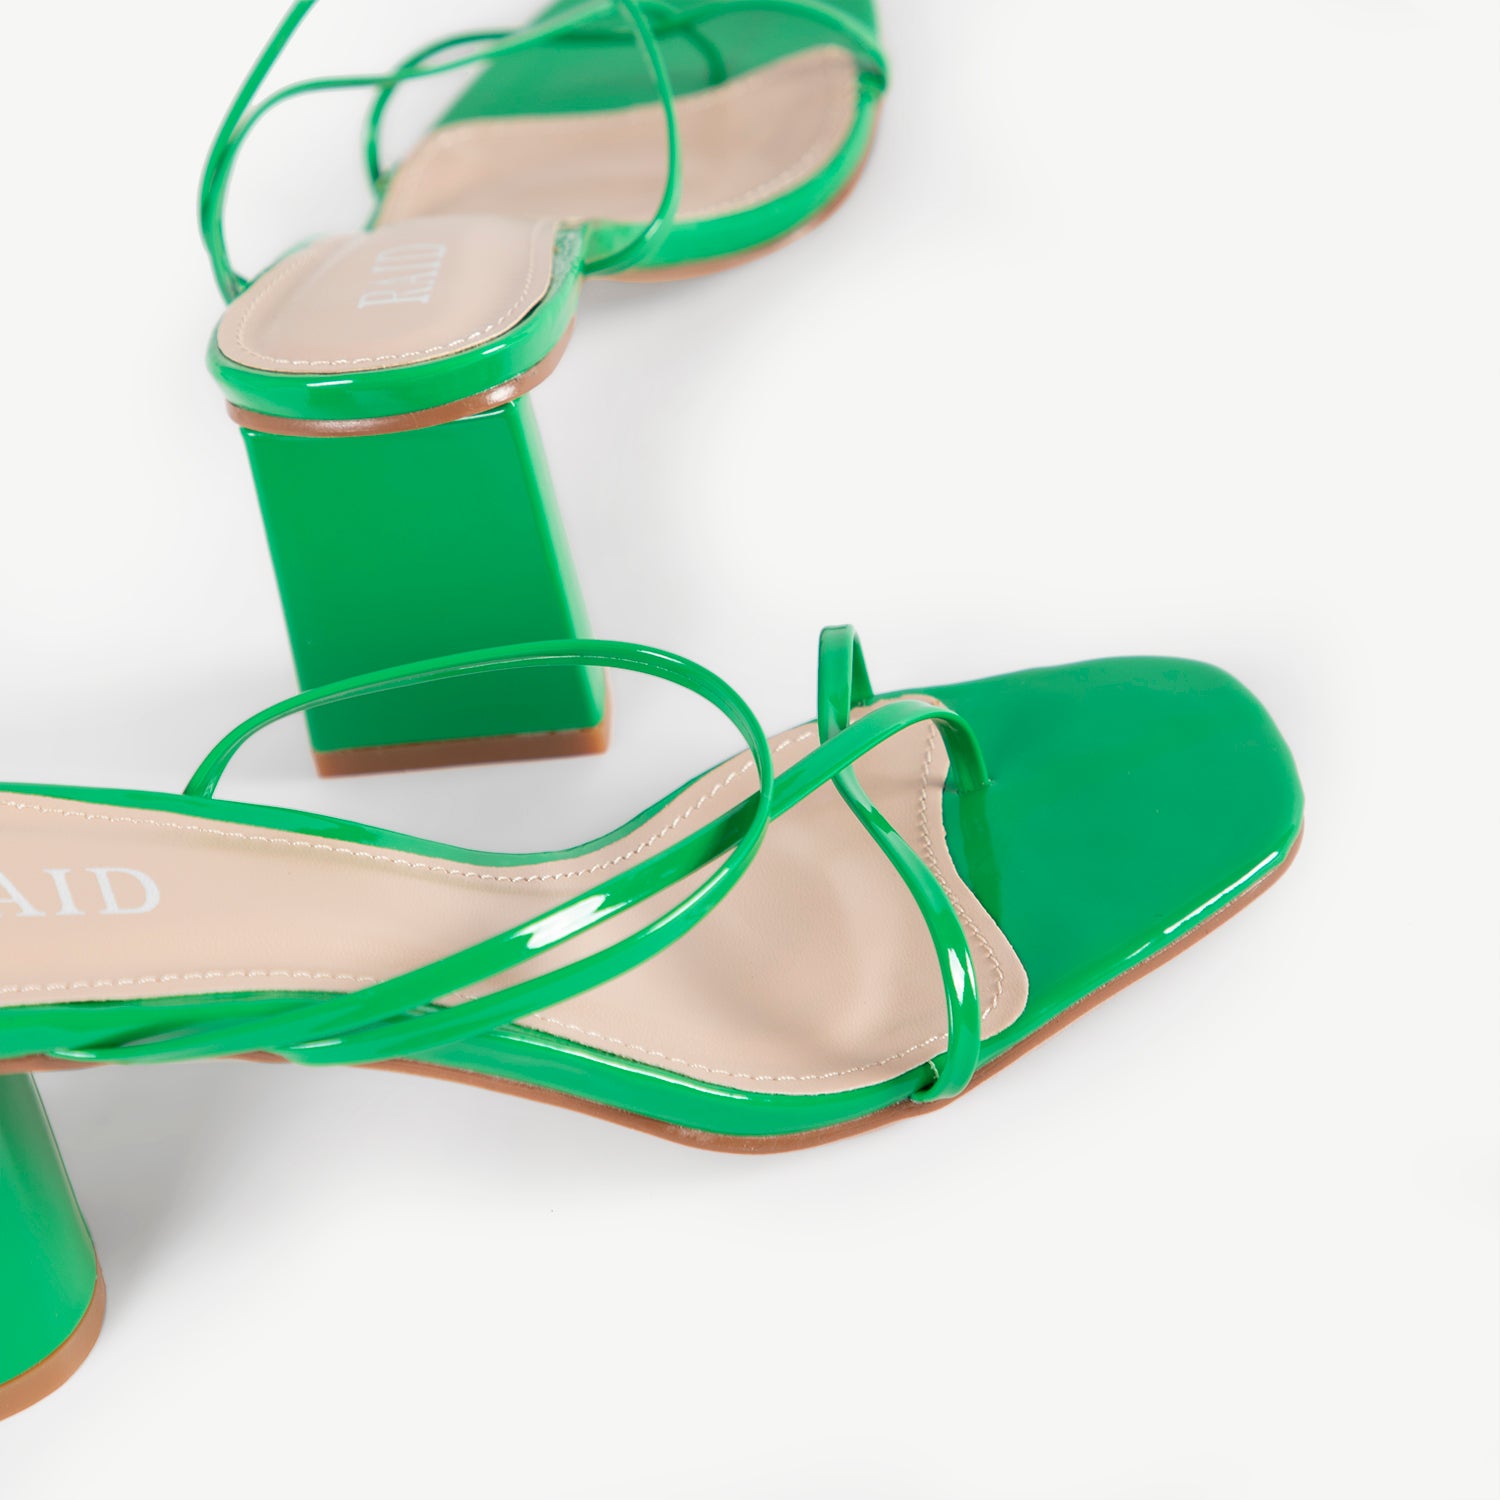 RAID Brioni Heeled Sandal in Green Patent